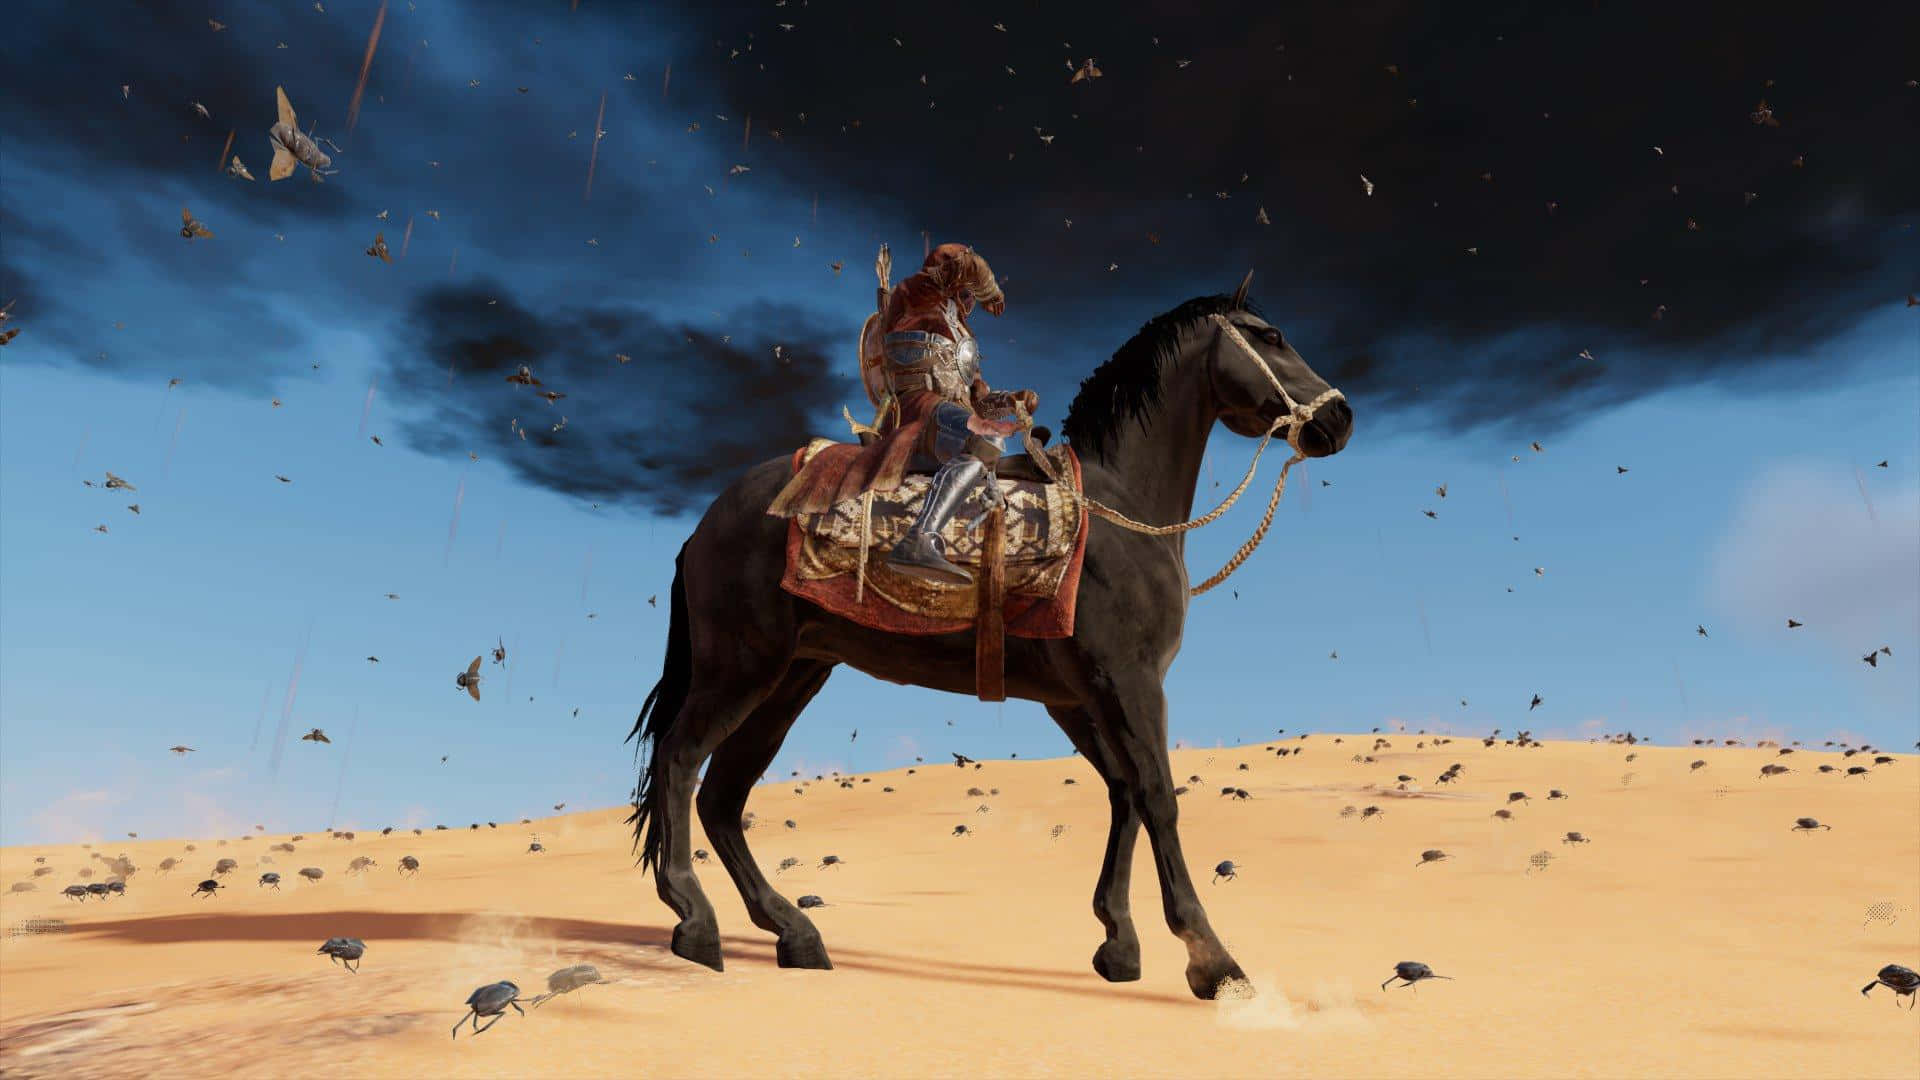 Enjoy the breathtaking visuals of Best Assassin's Creed Origins